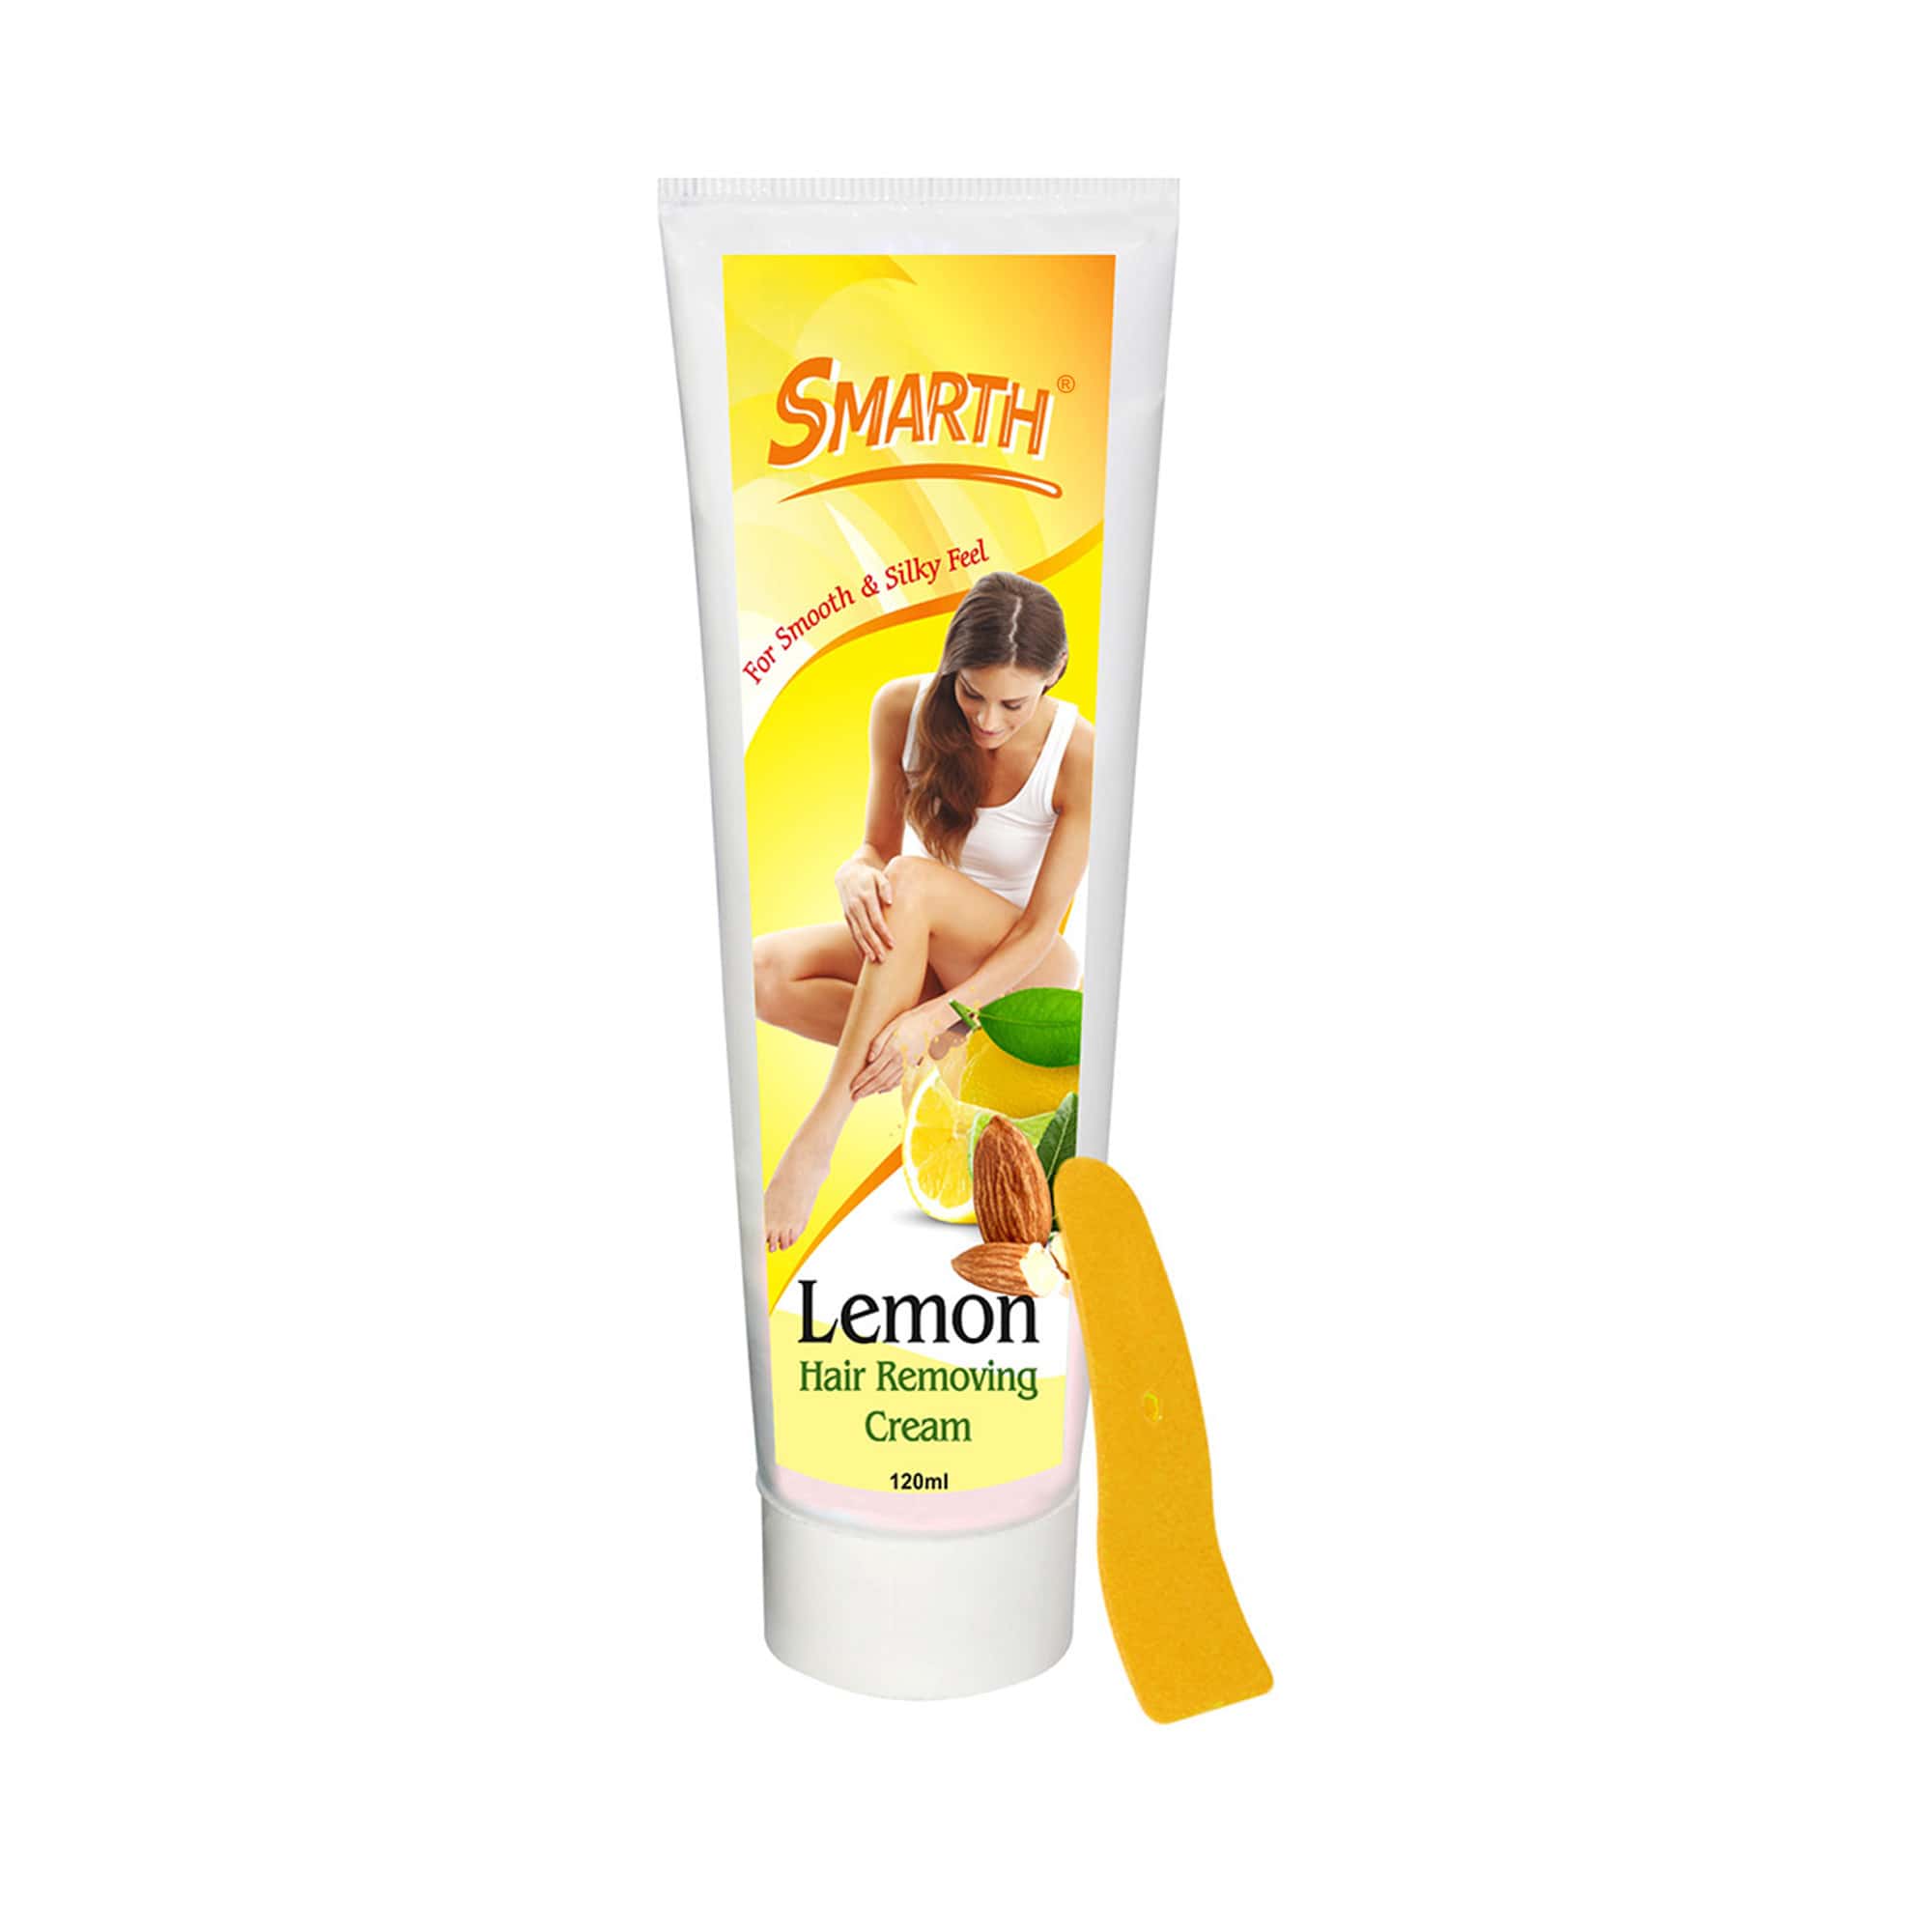 Lemon Hair Removing Cream